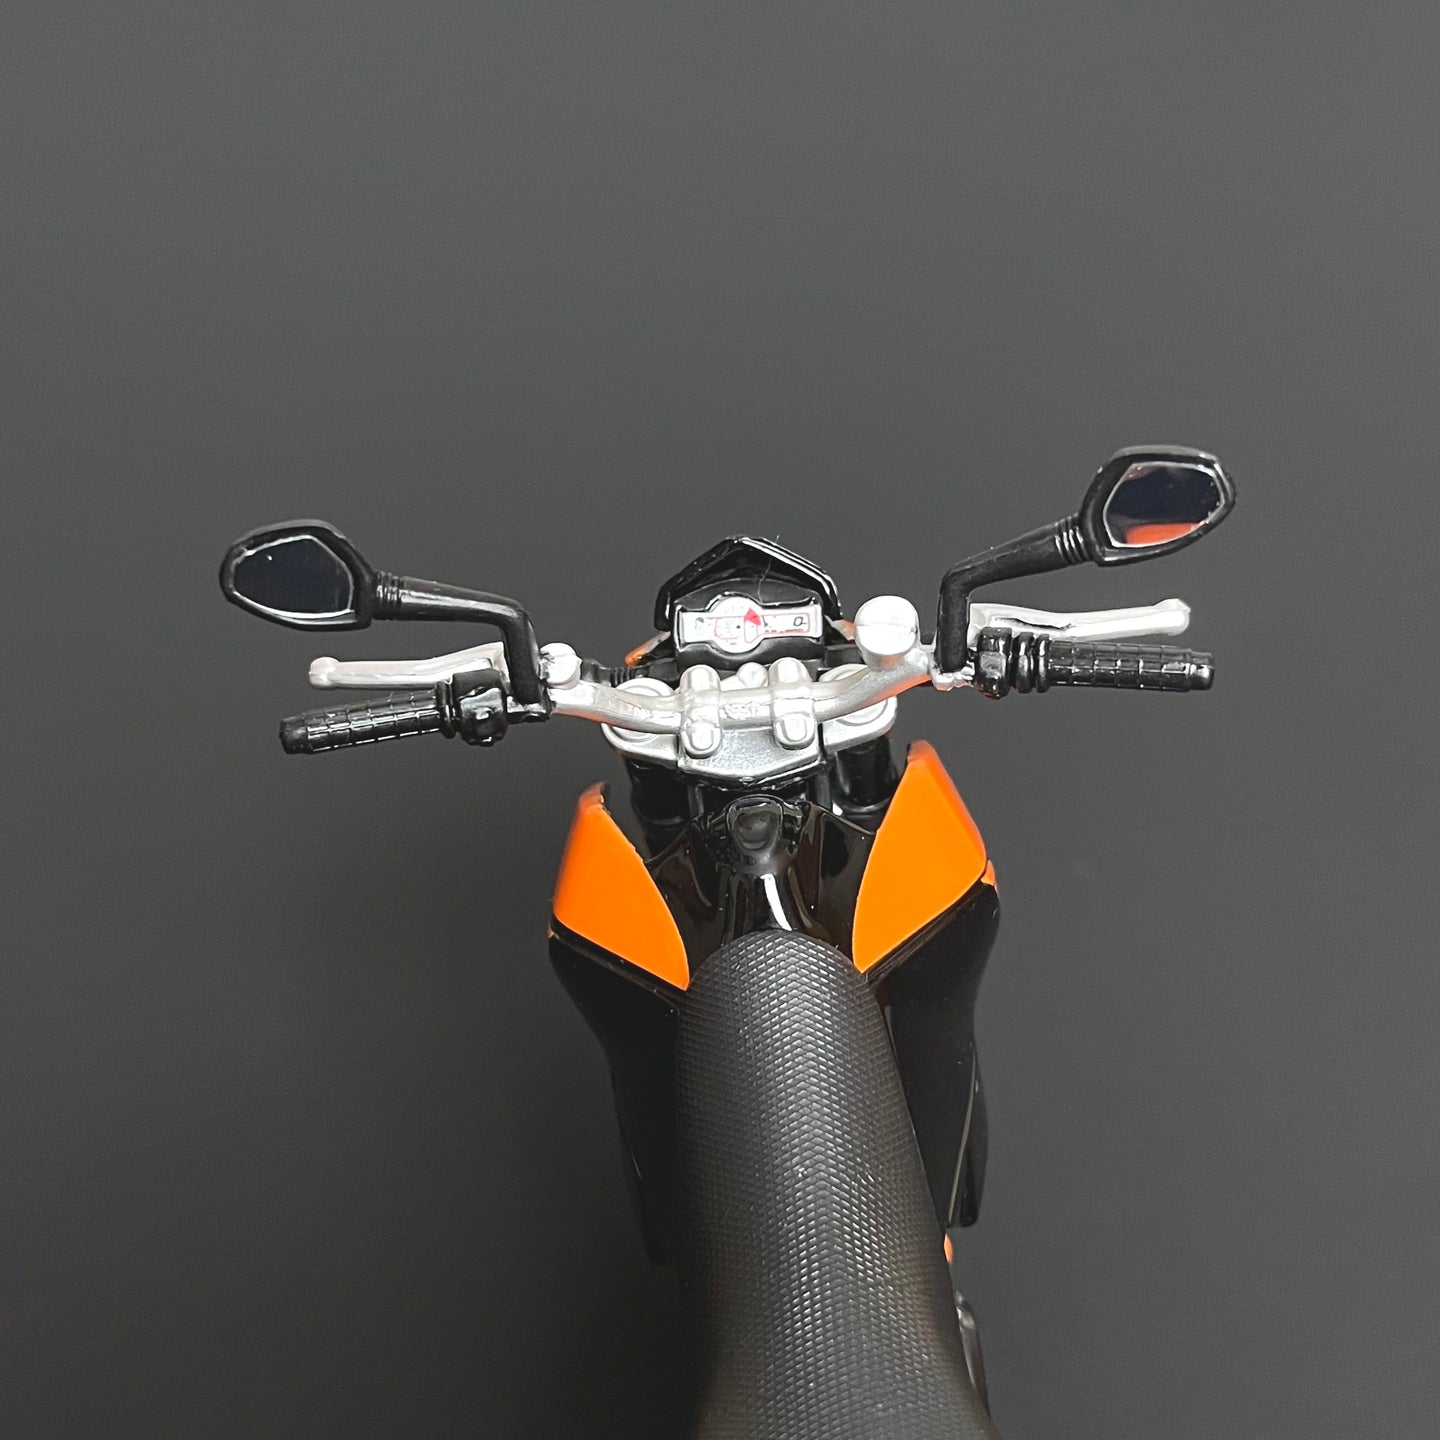 KTM 690 Duke Diecast Bike 1:12 Motorcycle Model By Maisto